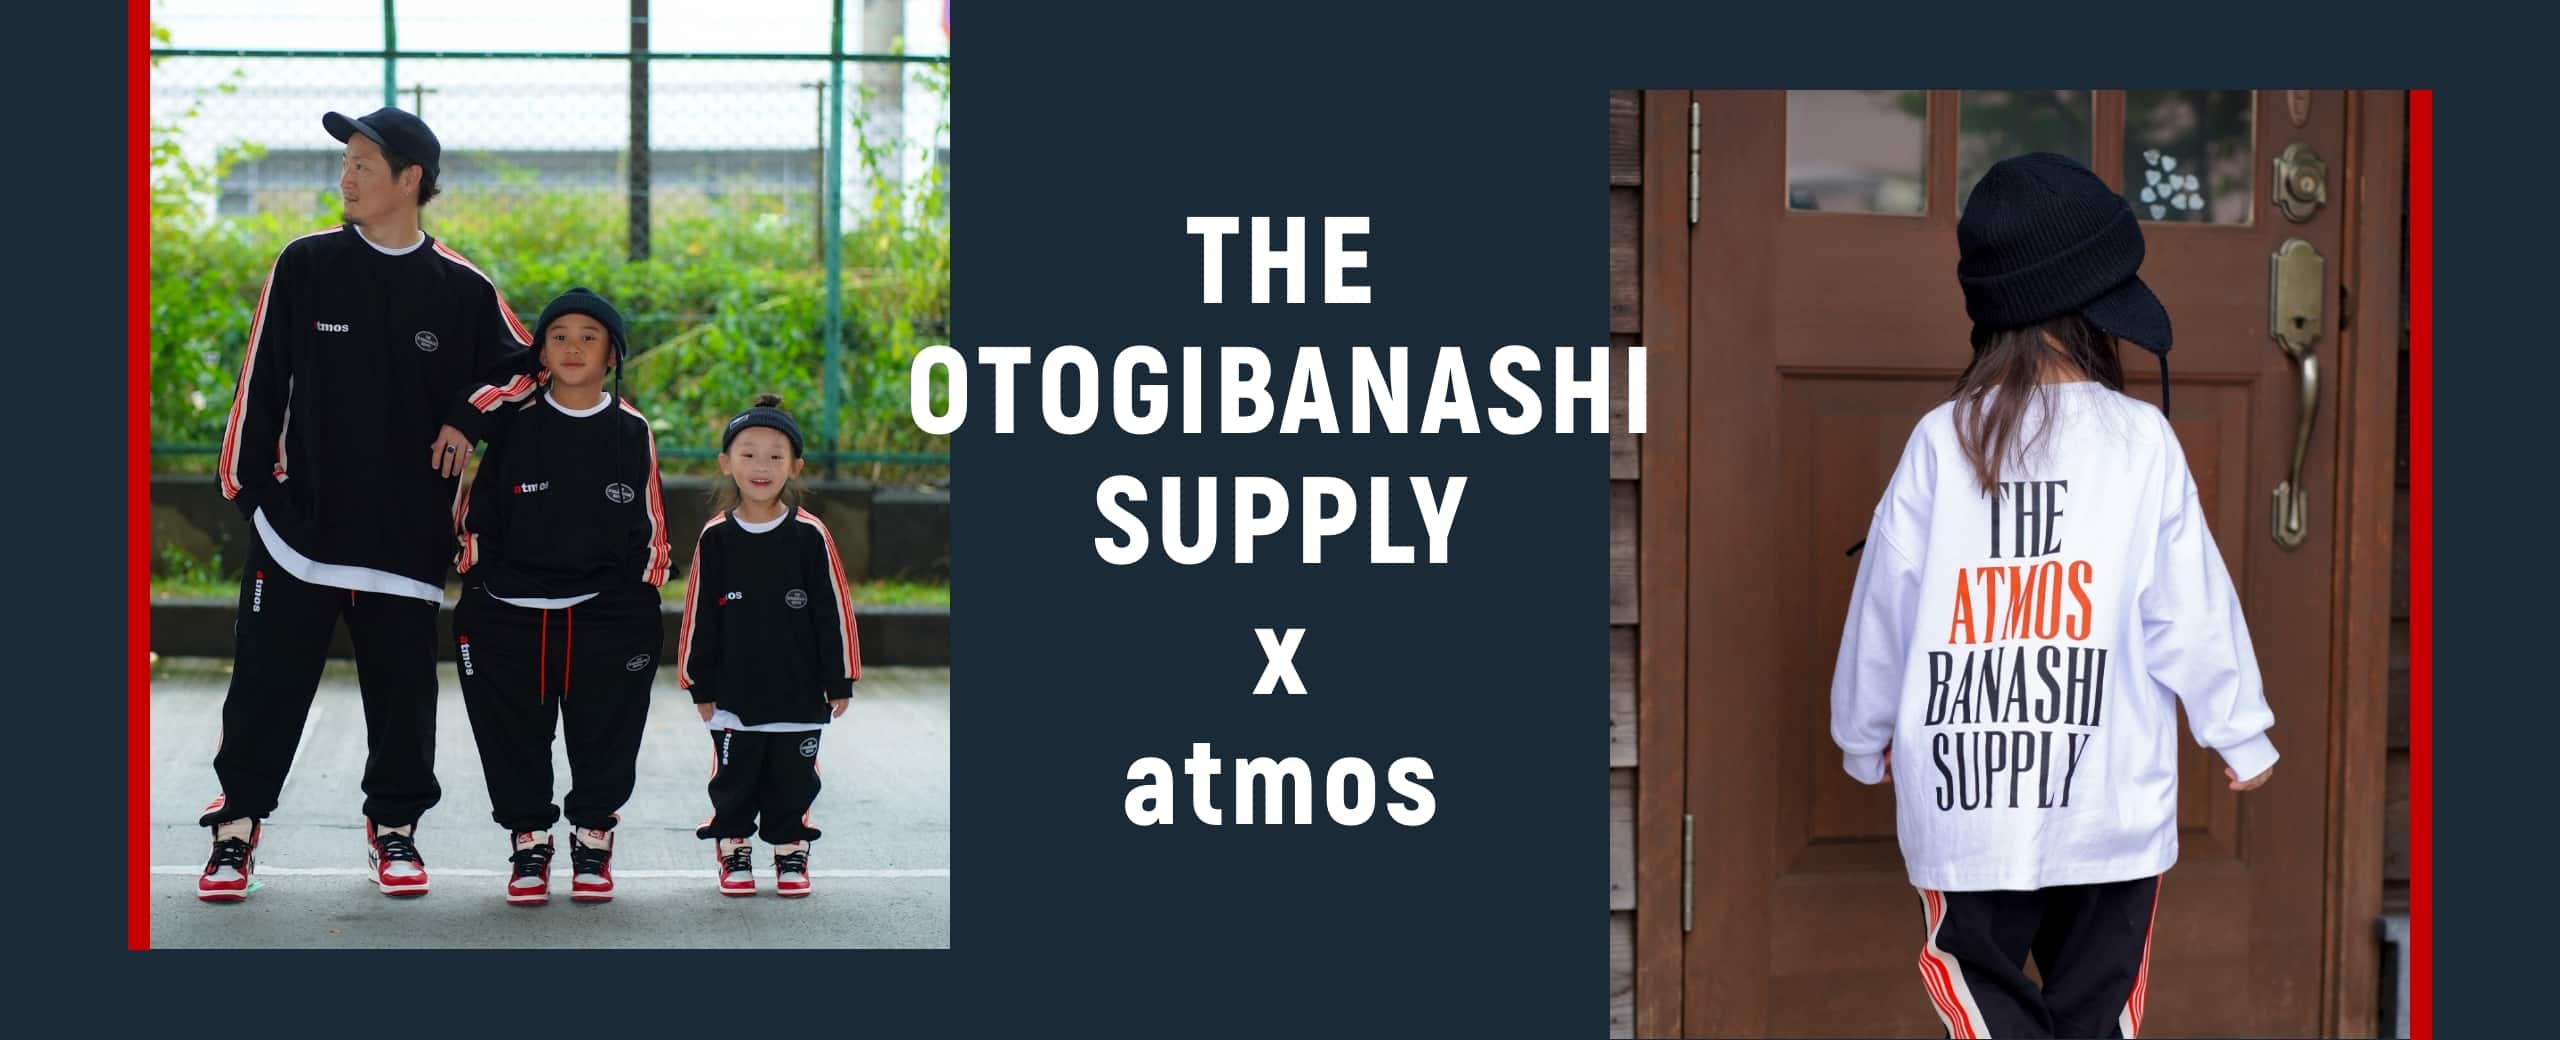 "THE OTOGIBANASHI SUPPLY x atmos"